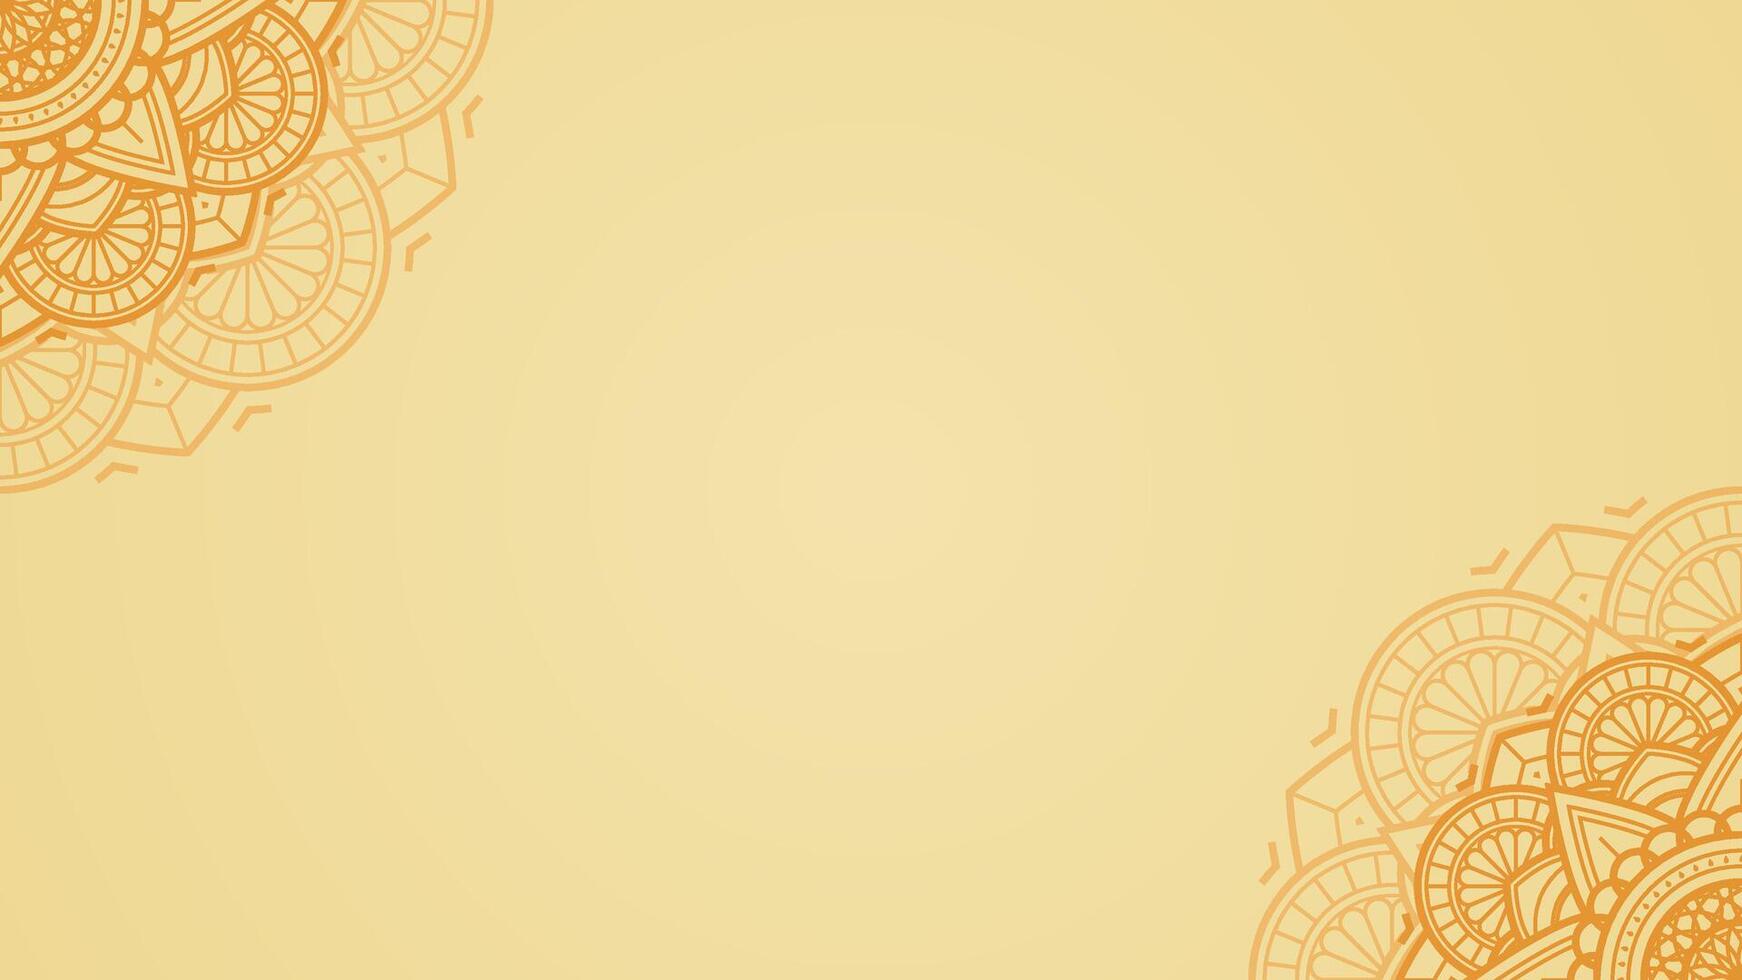 Luminous Light Yellow Gold Saffron Blank Horizontal Vector Background Adorned with Citrus Mandala Artwork